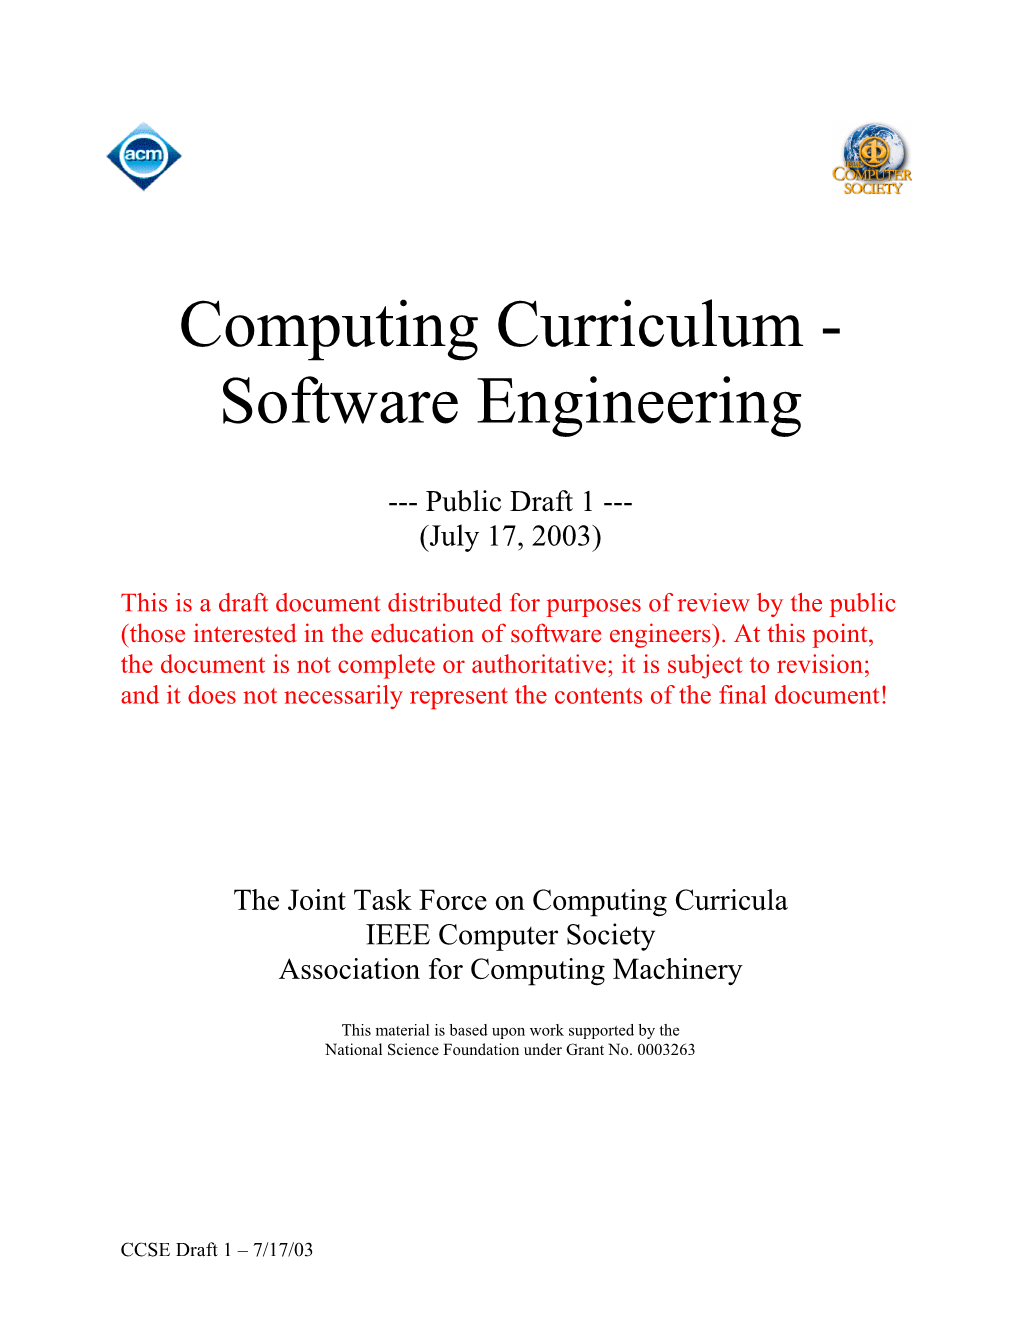 Computing Curriculum - Software Engineering